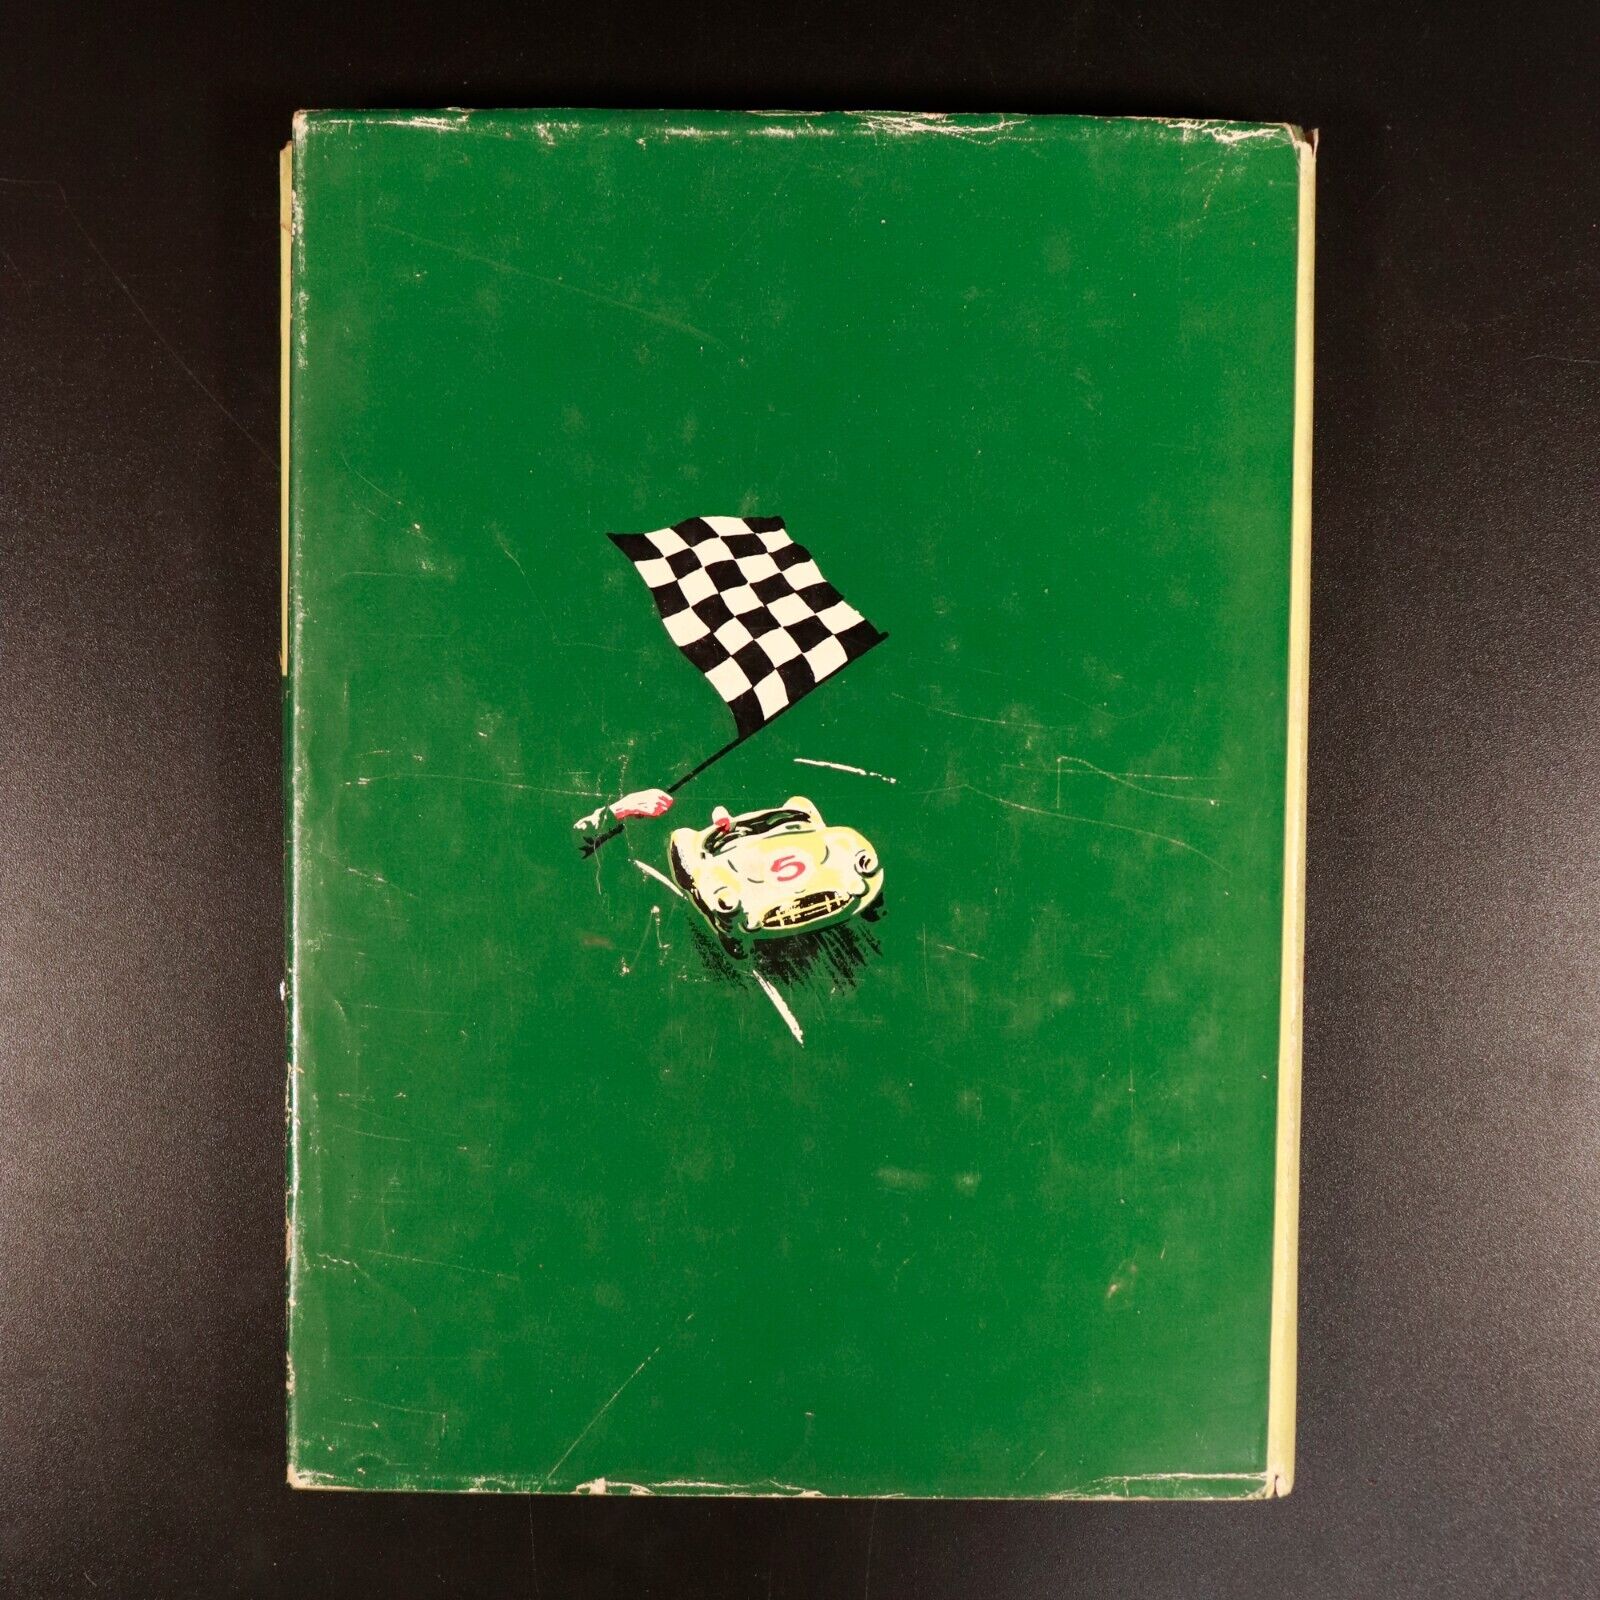 1960 Jack Brabham's Motor Racing Book Vintage Automotive Book Car Racing